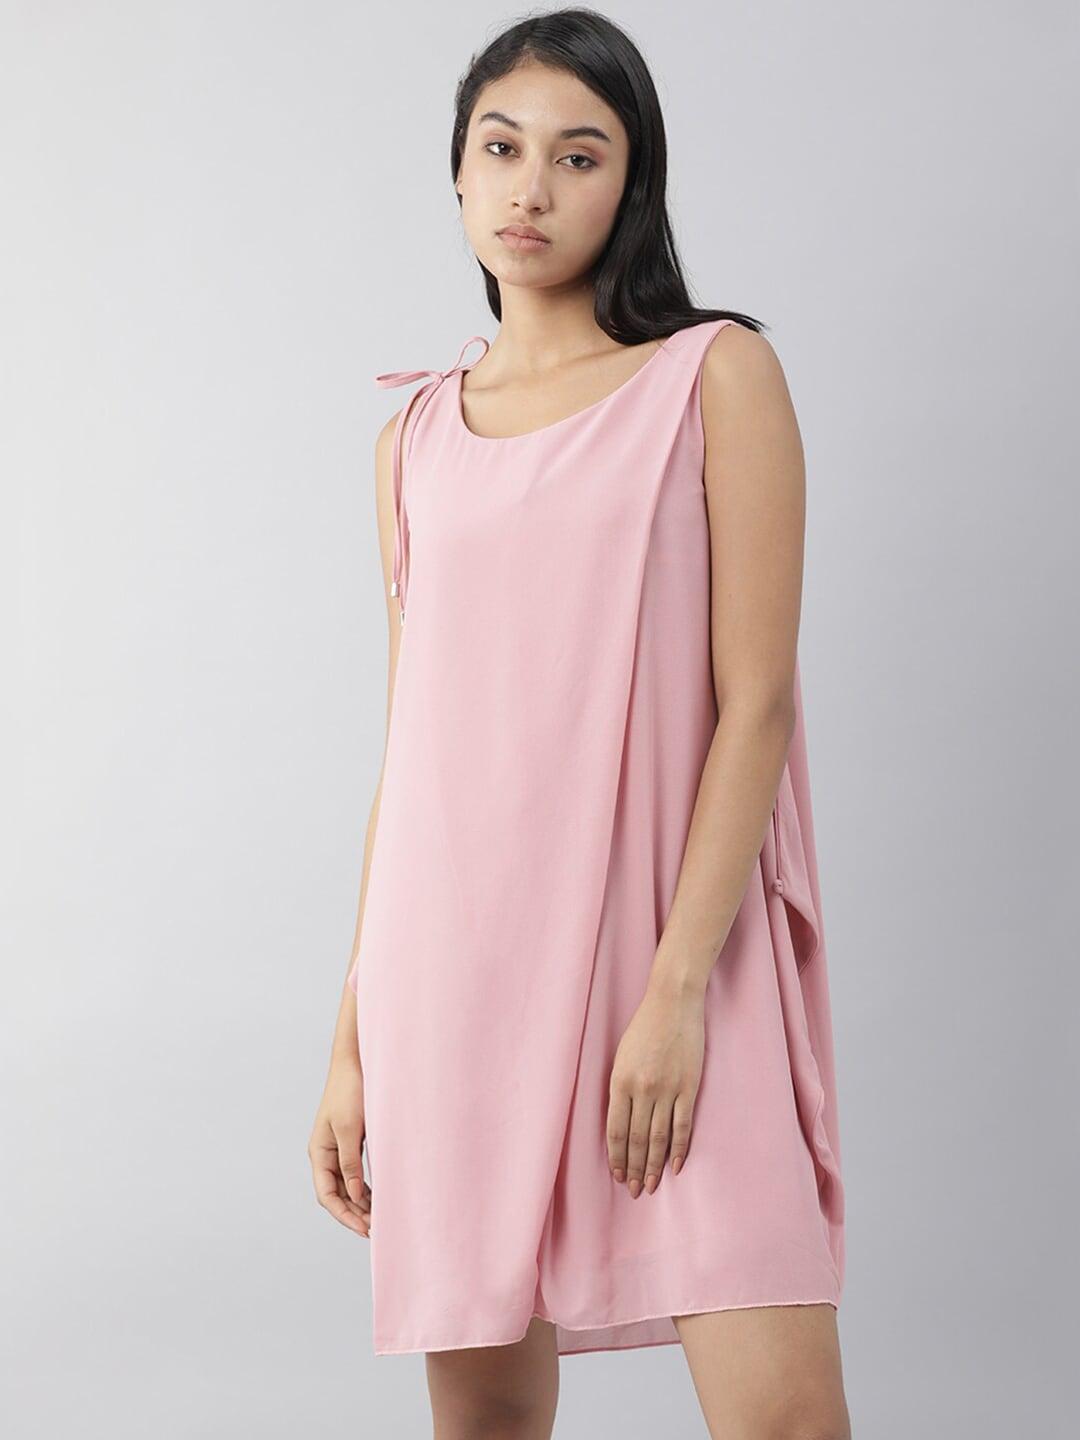 rareism pink a-line dress